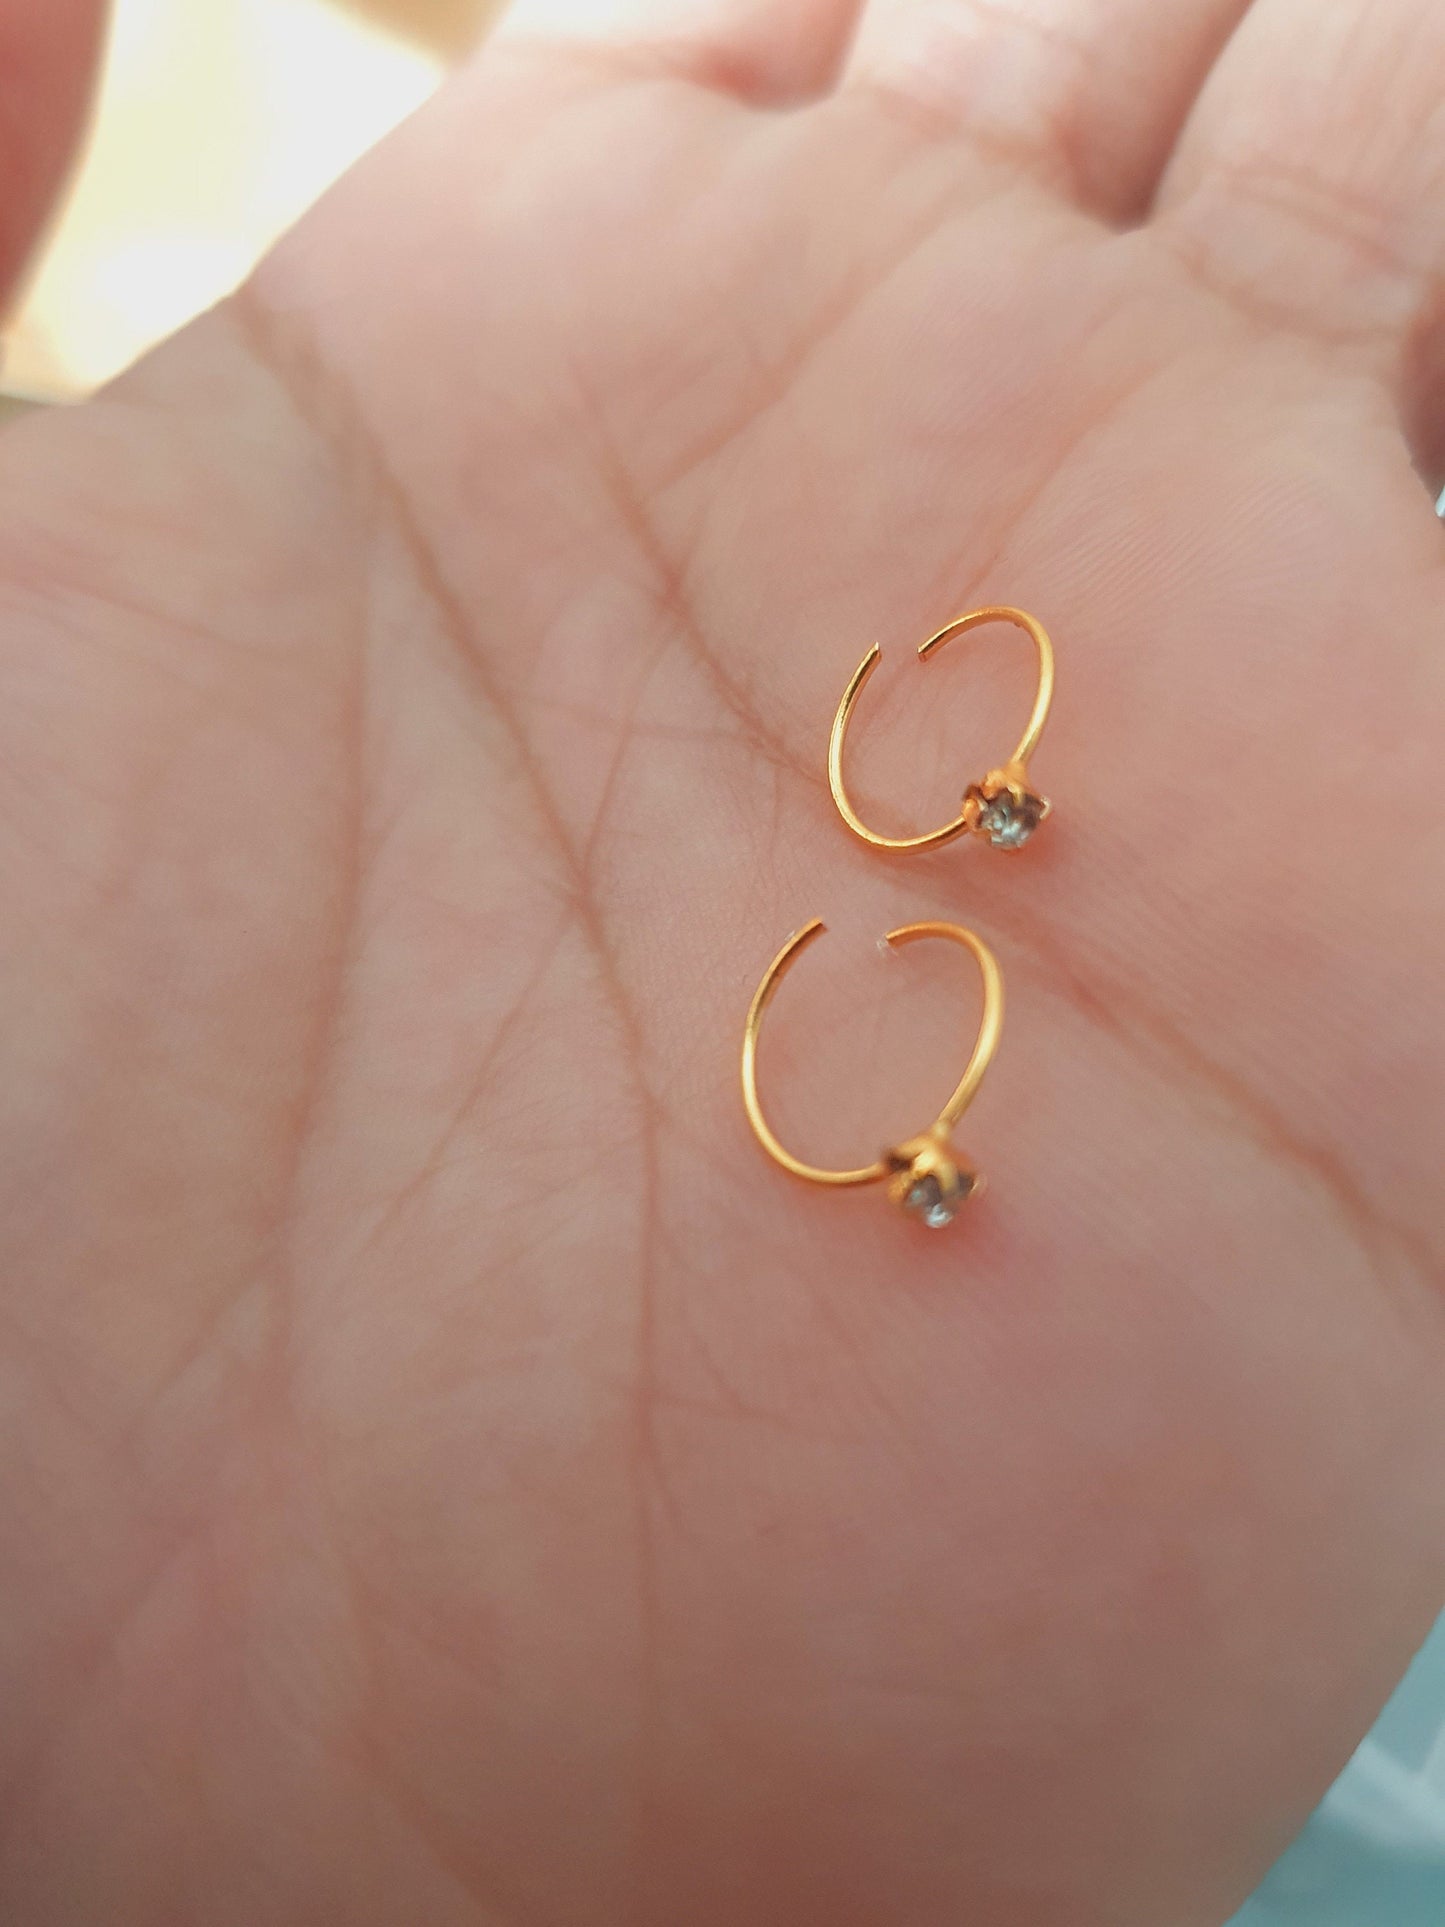 2 Hoop Gold Zirconia Nose Rings Indian Jewelry earpiercings chic piercing diamond nose ring